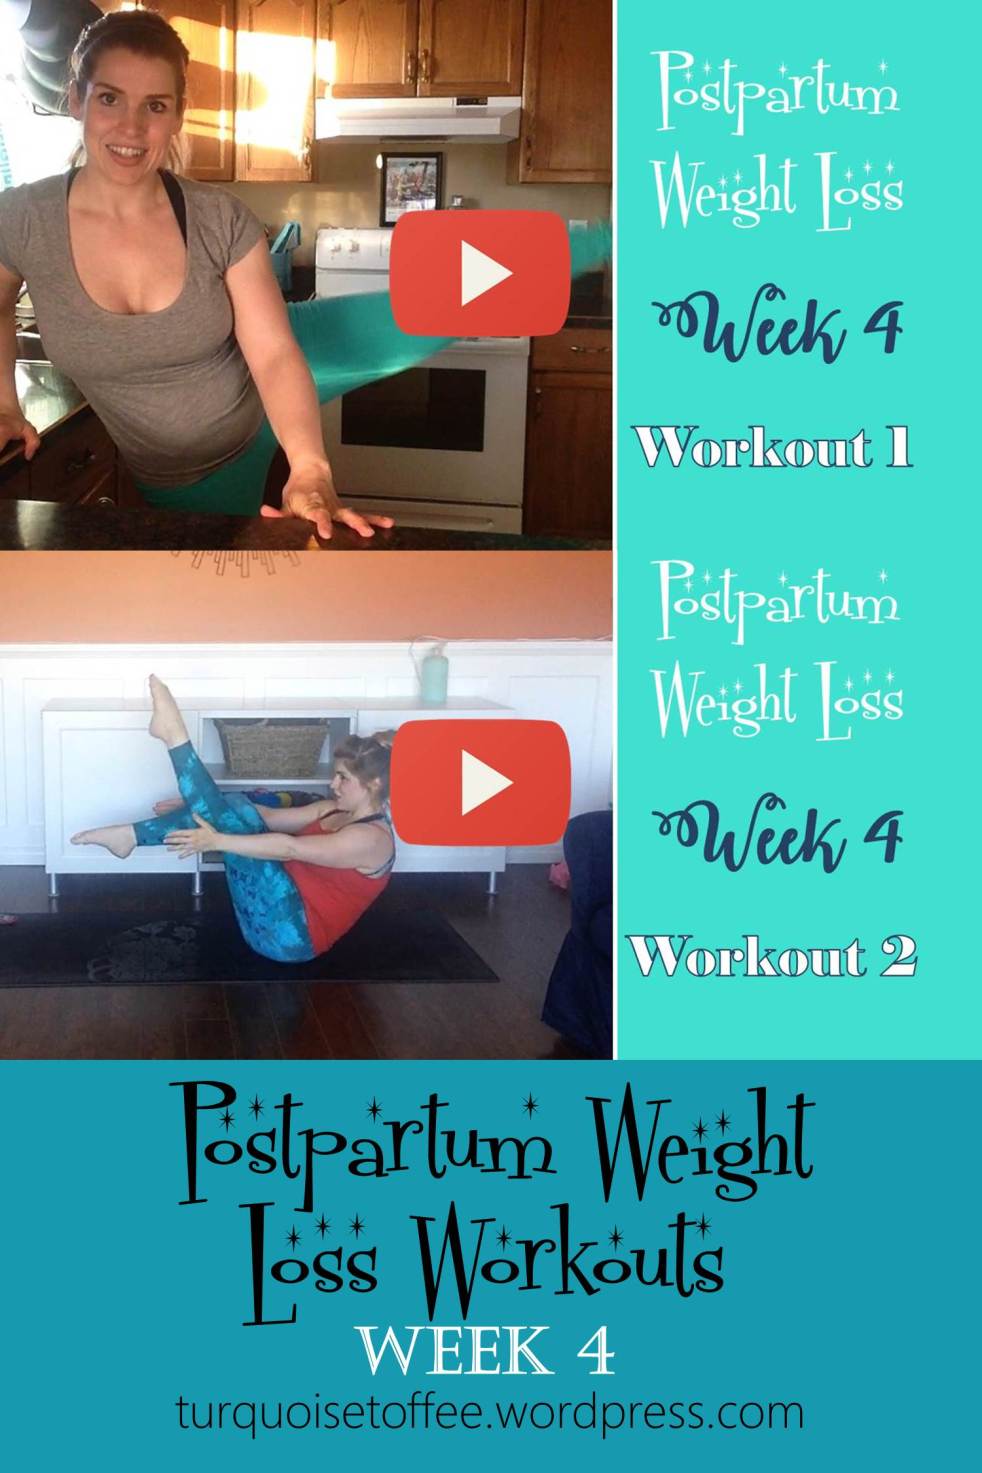 Postpartum Weight Loss Workouts Week 4